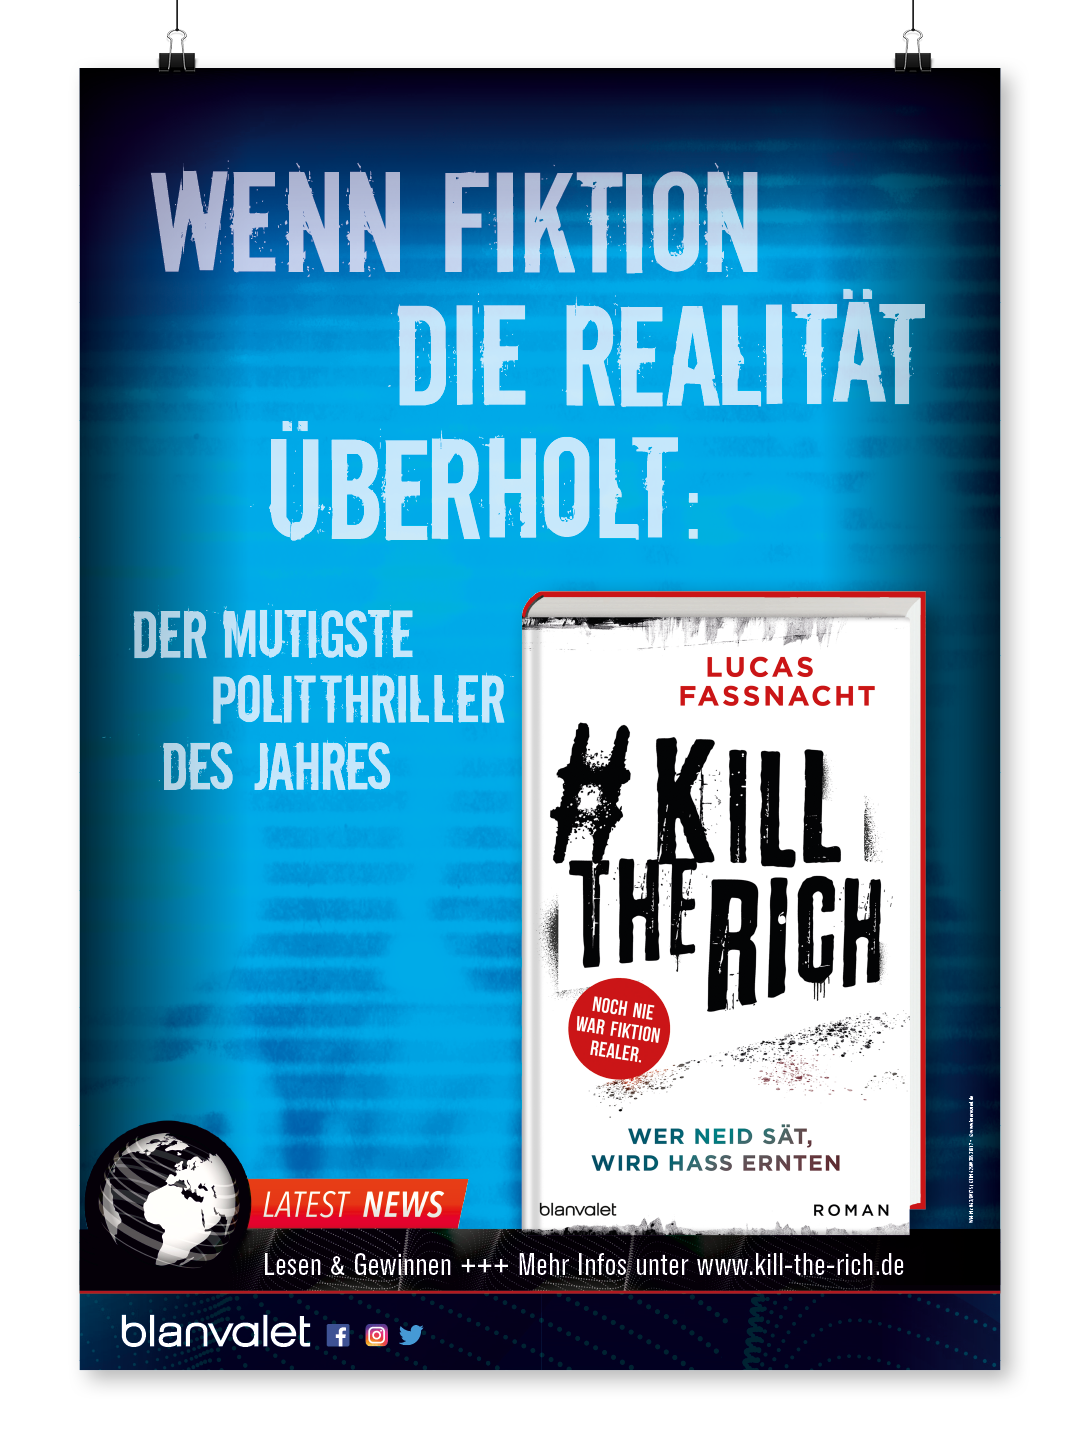 Lucas Fassnacht-#killtherich, Kill the rich